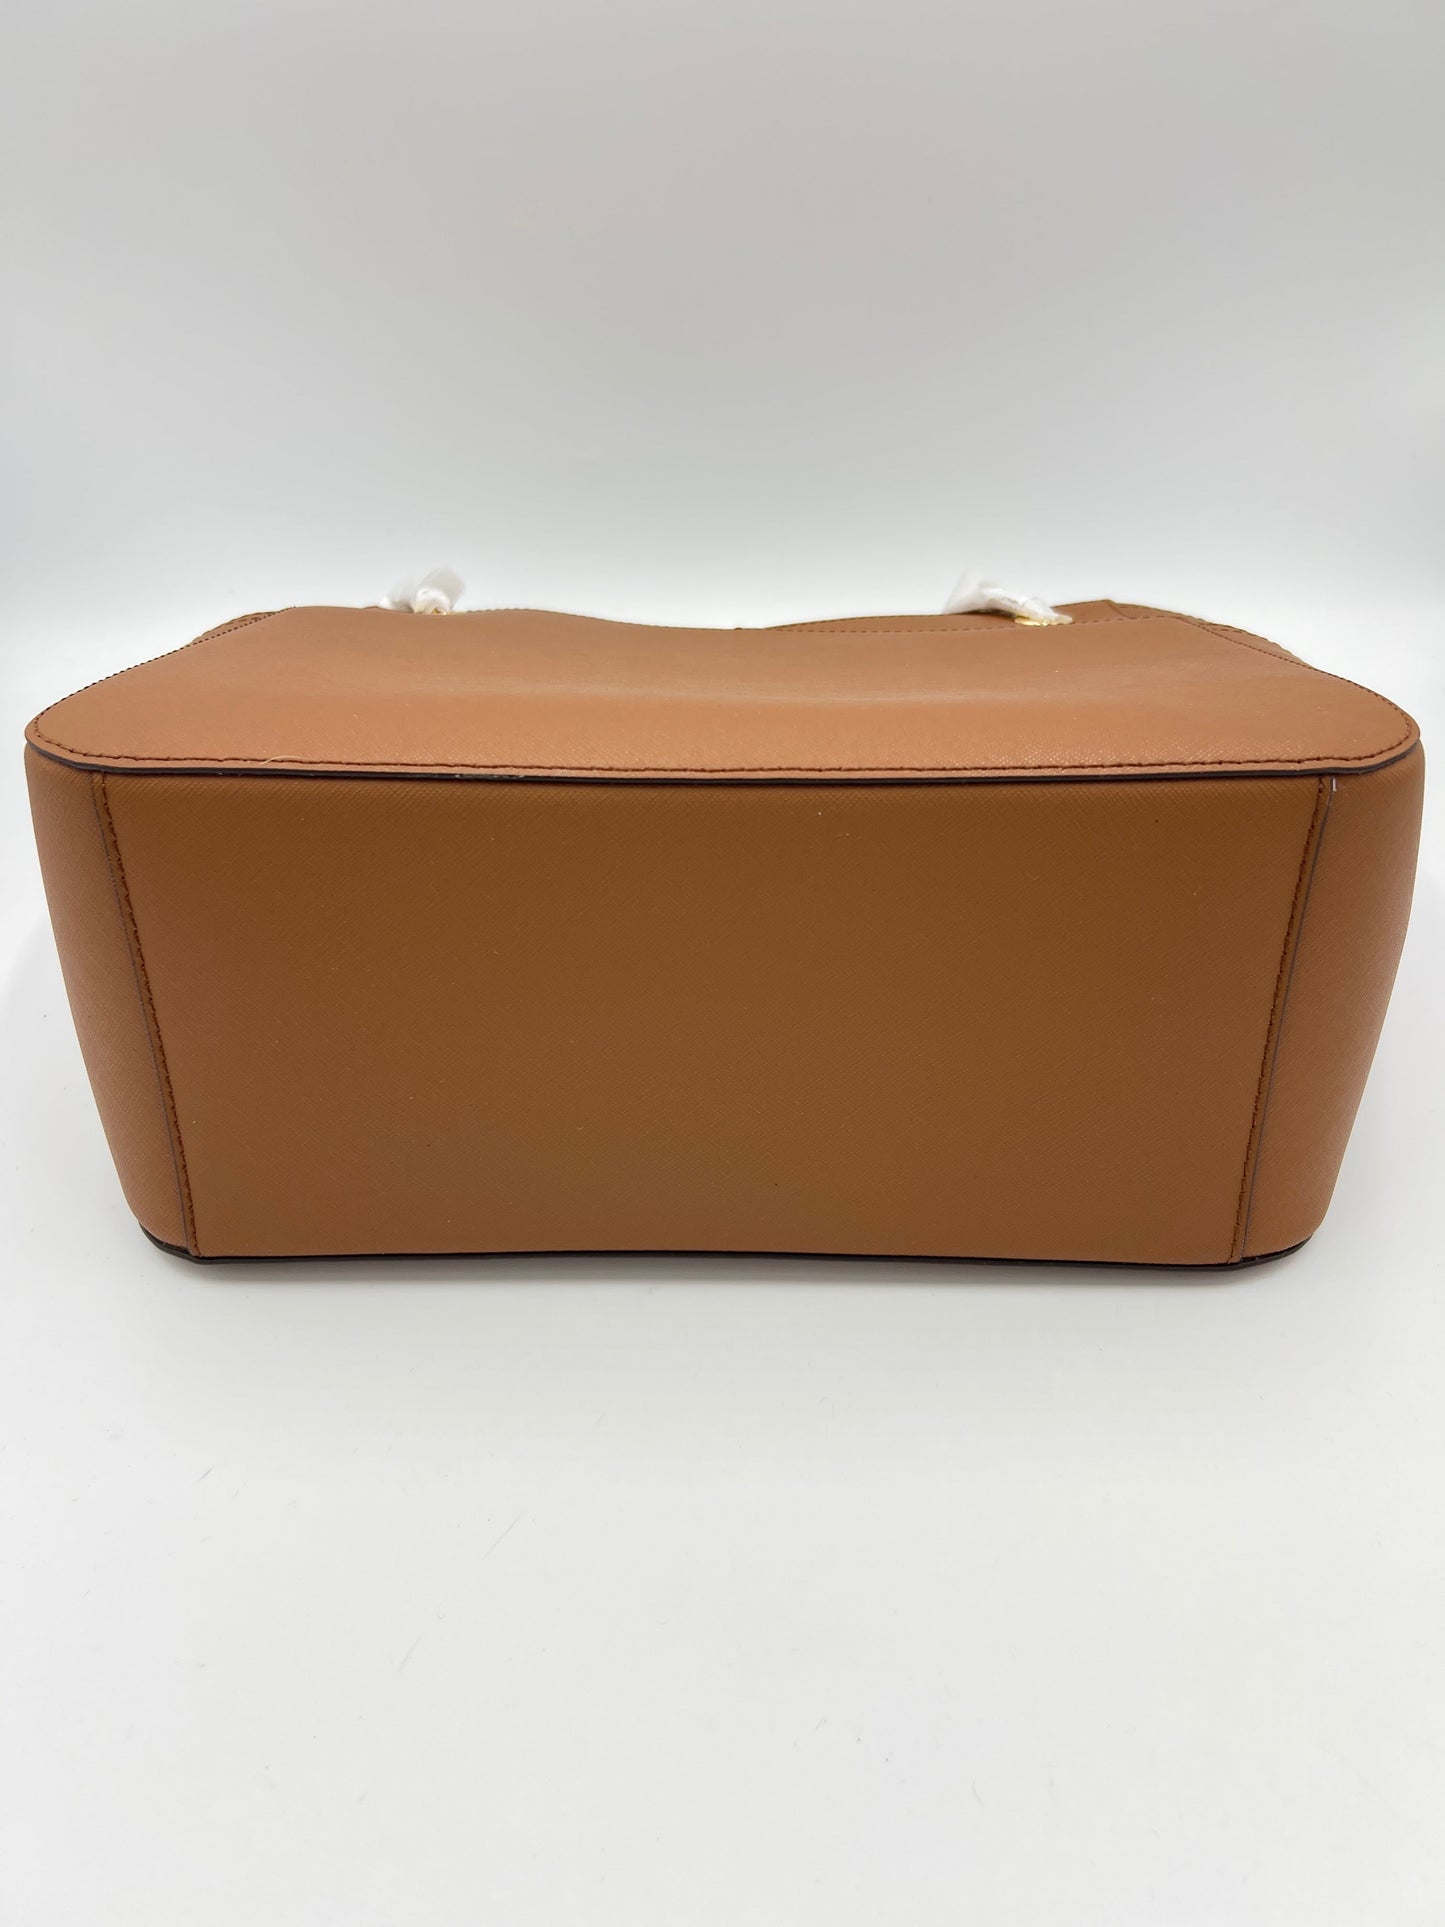 New! Handbag Designer Michael Kors